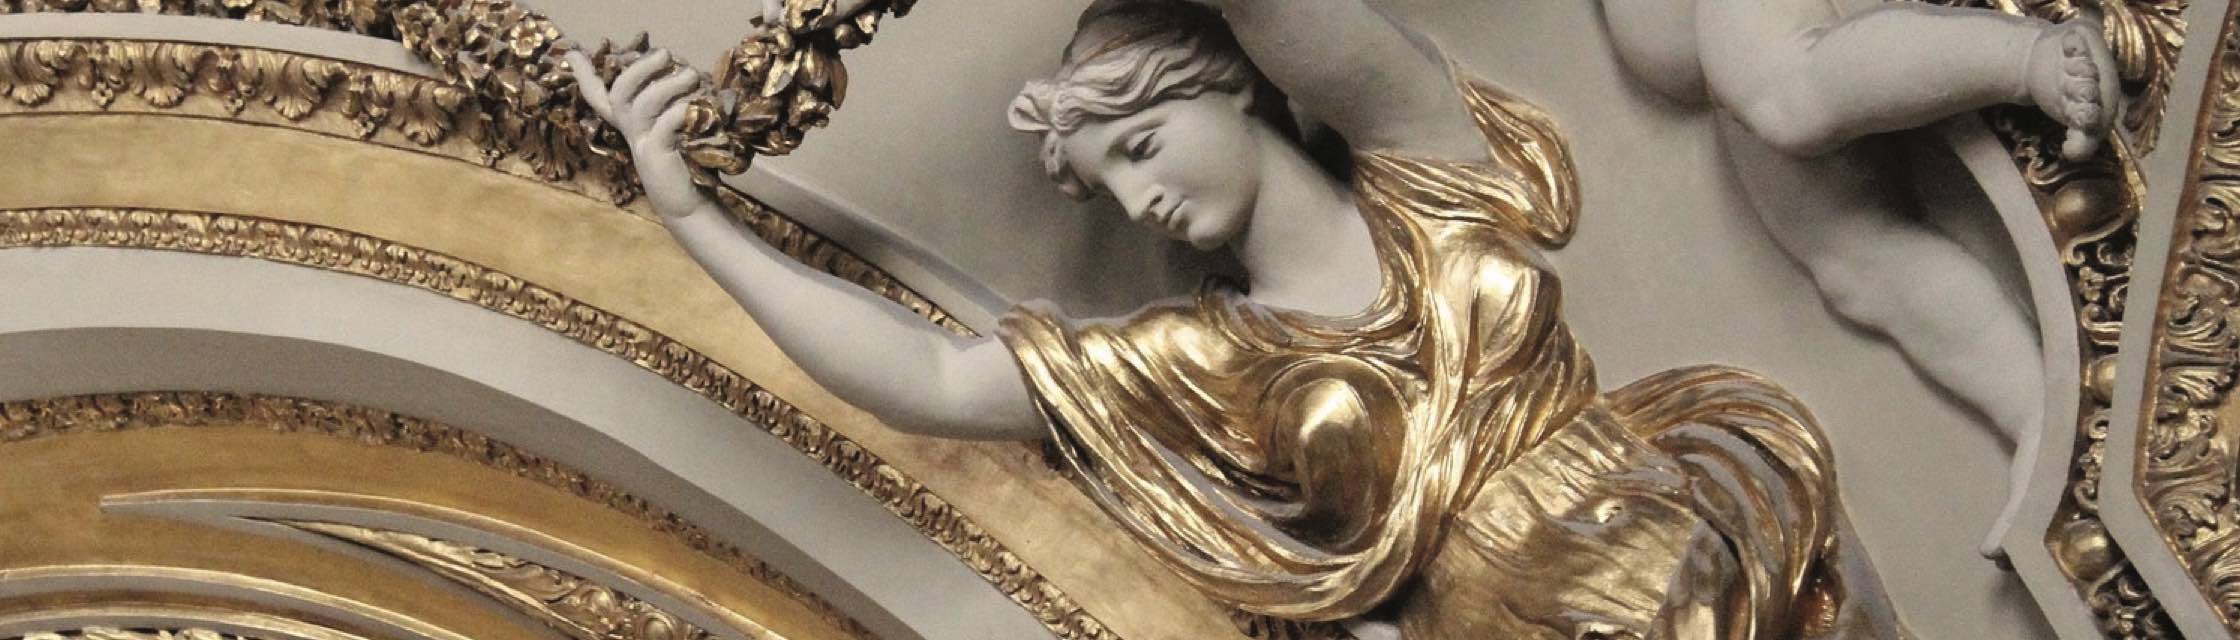 Una escultura ornamentada de una mujer.